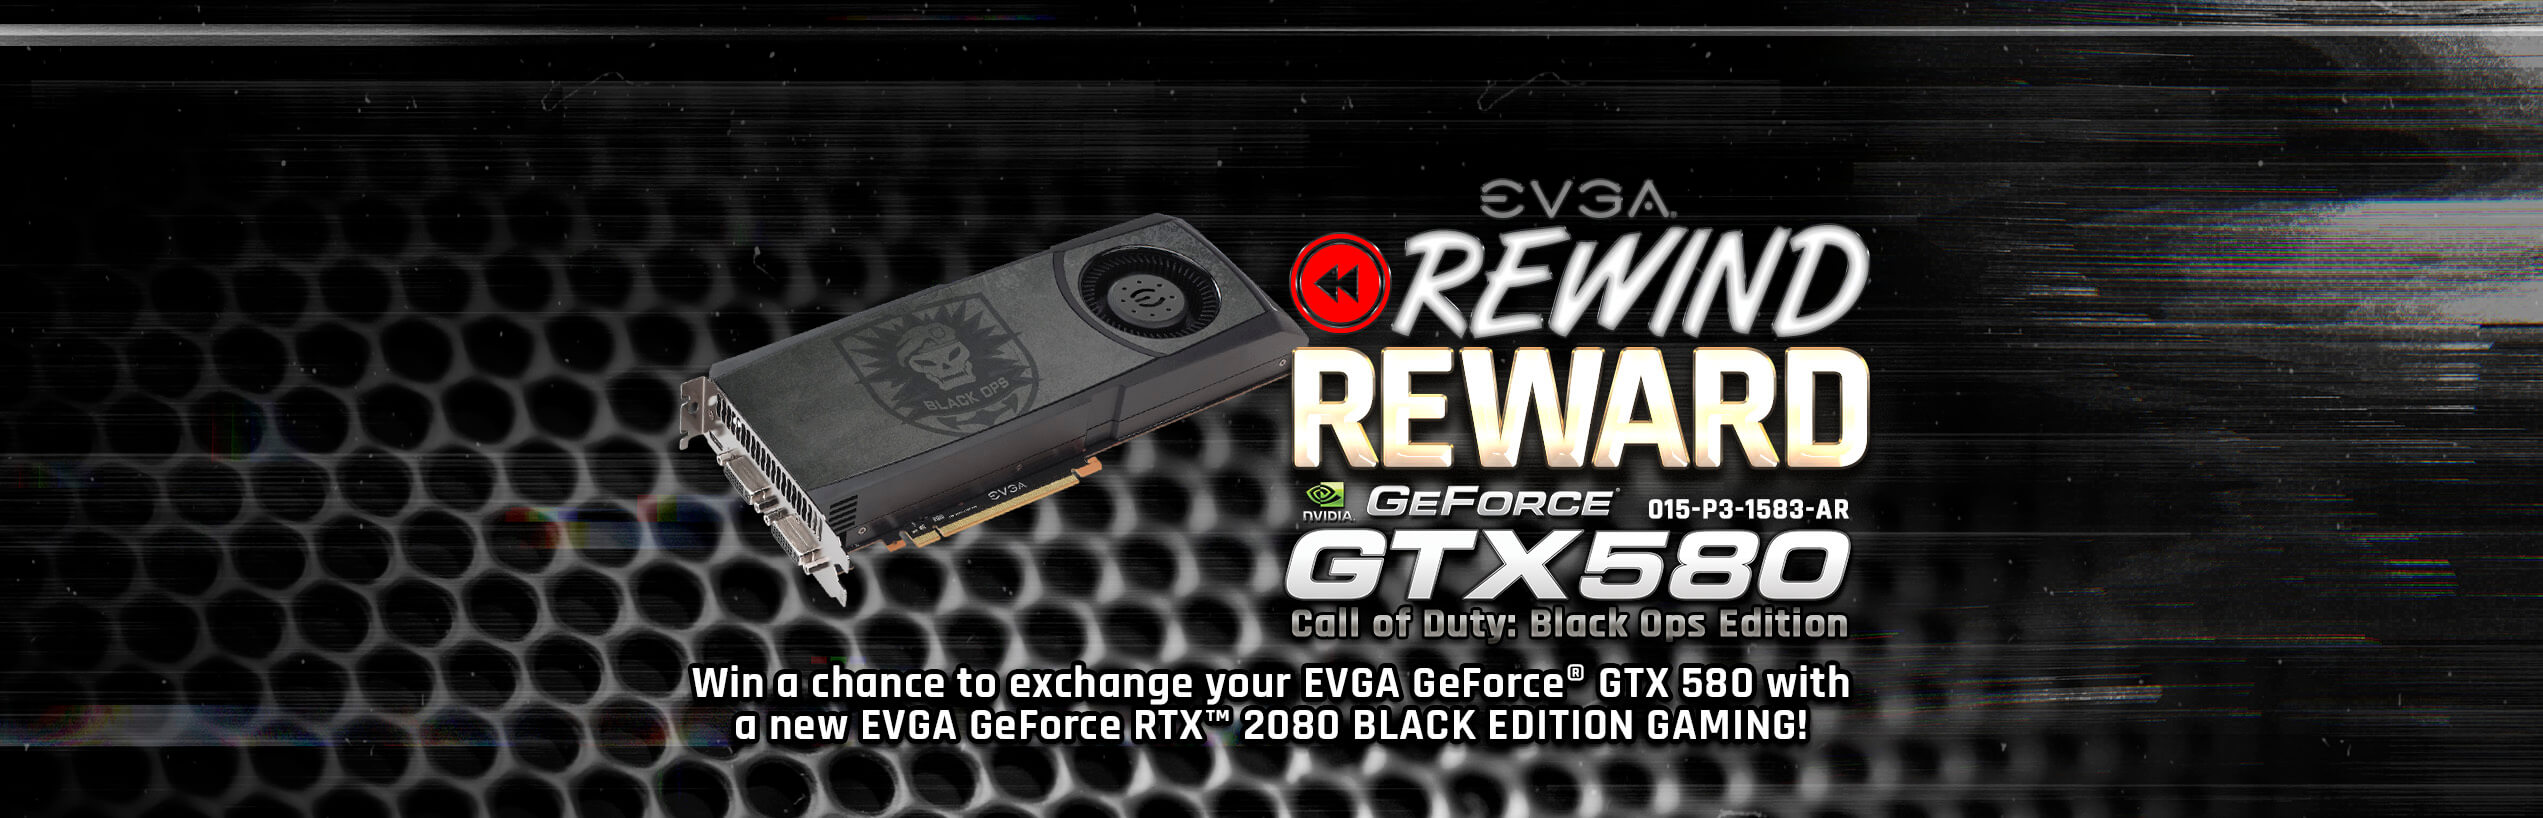 EVGA GeForce GTX 580 Call of Duty: Black Ops Edition to EVGA GeForce RTX 2080 BLACK EDITION